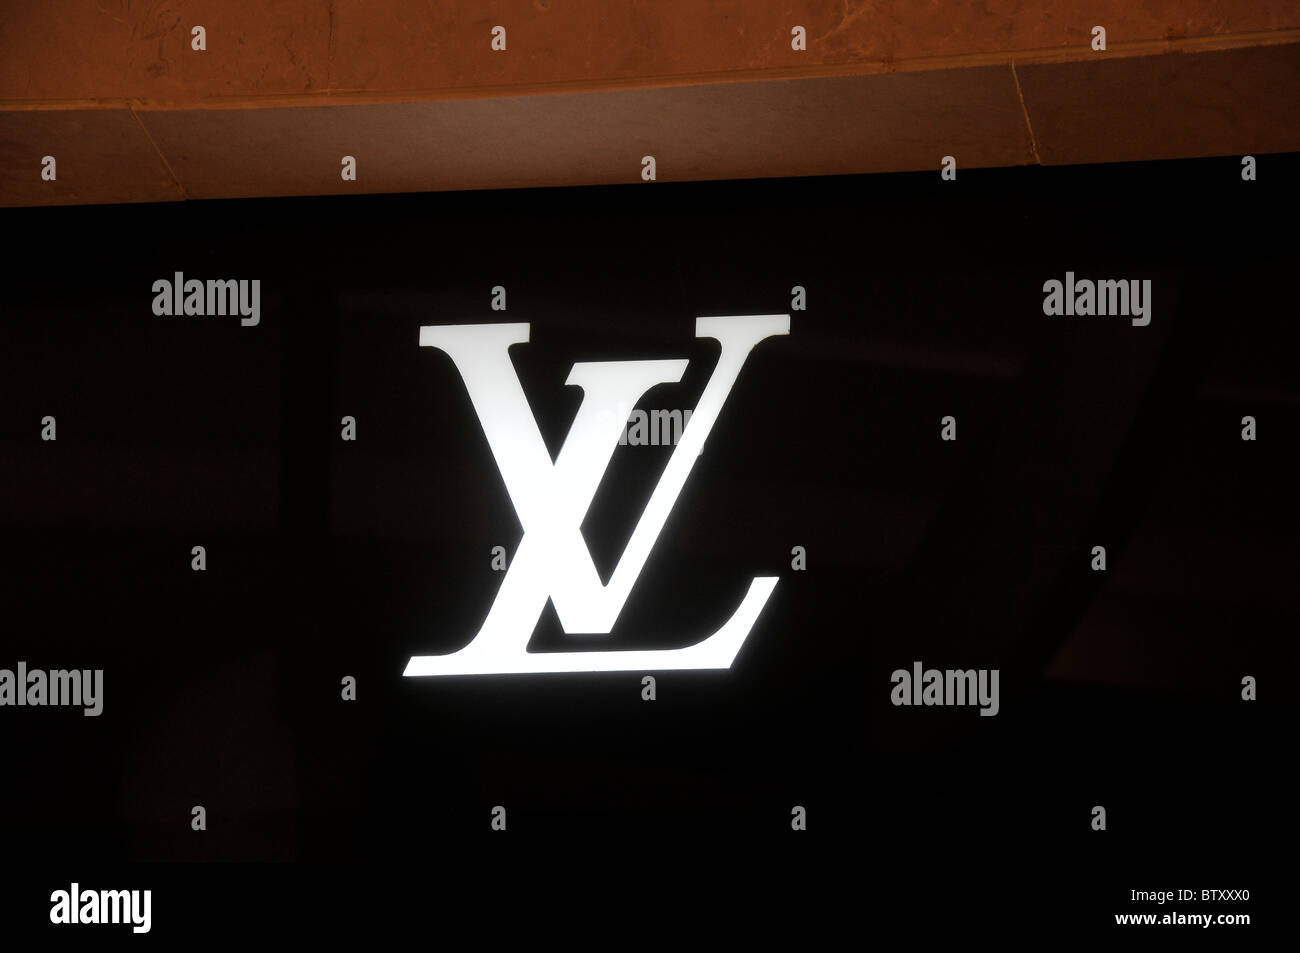 Louis vuitton logo Cut Out Stock Images & Pictures - Alamy